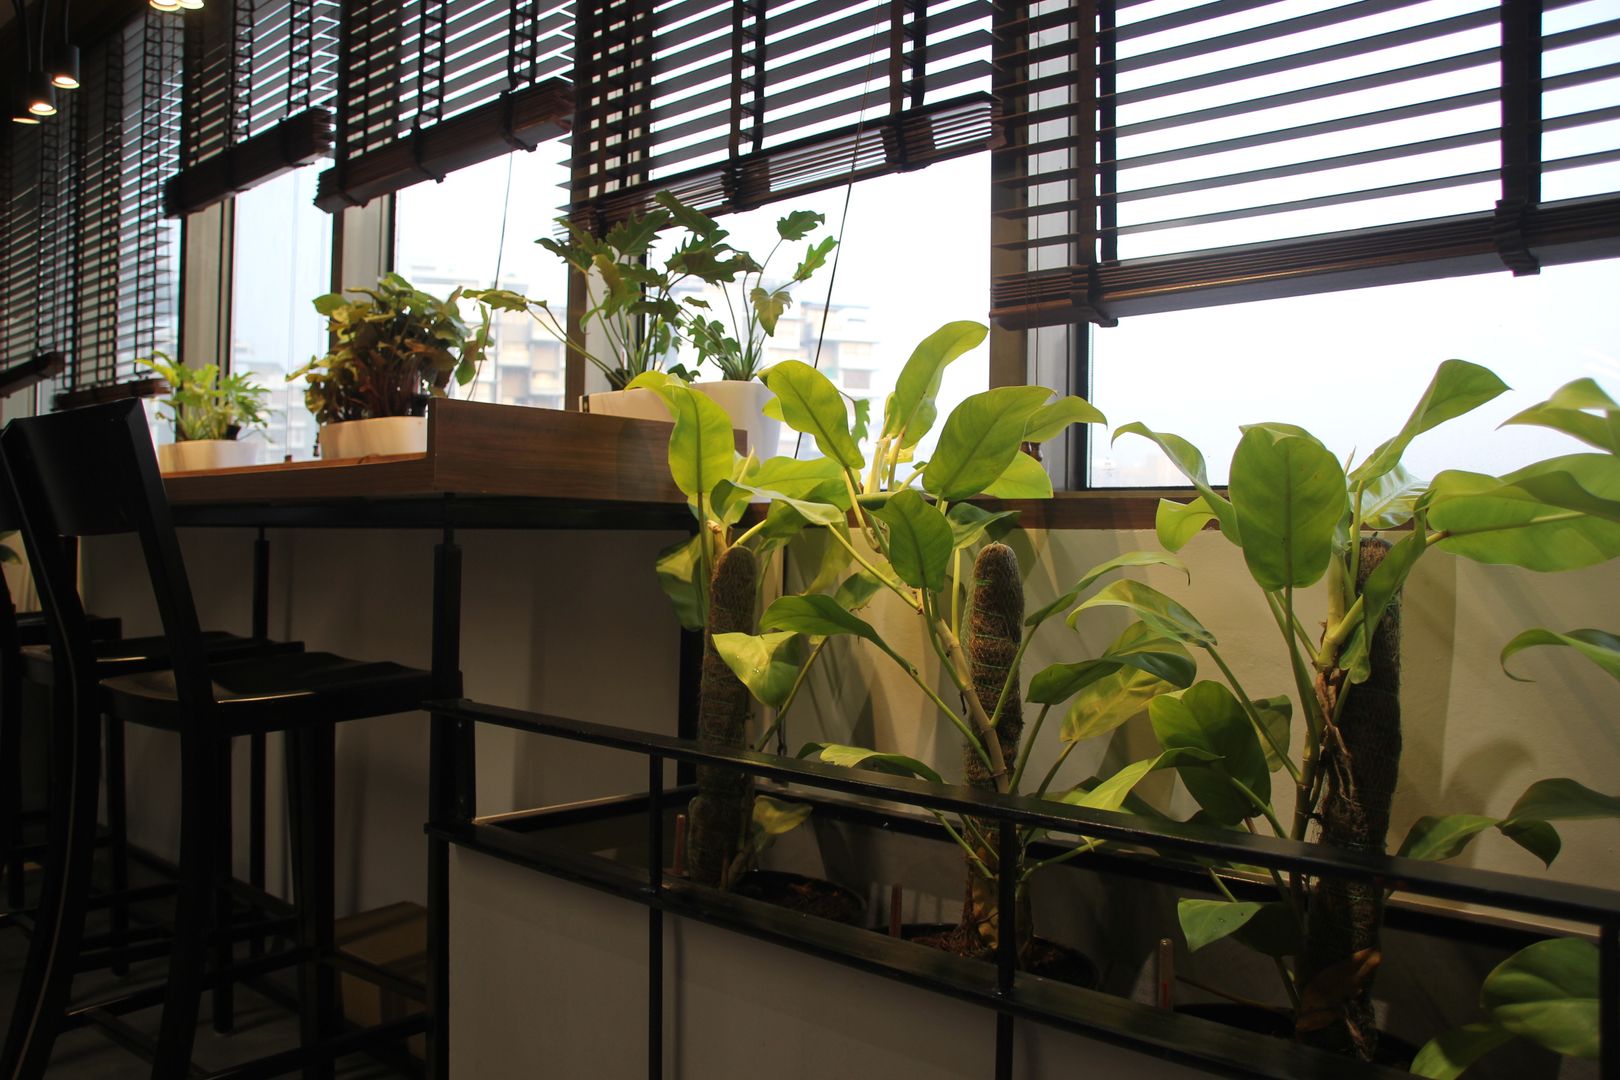 Interioforest helped an office to come Alive Interioforest Plantscaping Solutions Modern study/office Tanaman, Properti, Daun, Desain interior, Arsitektur, Vegetasi, Tanaman rumah, Dinding, Garis, Naungan